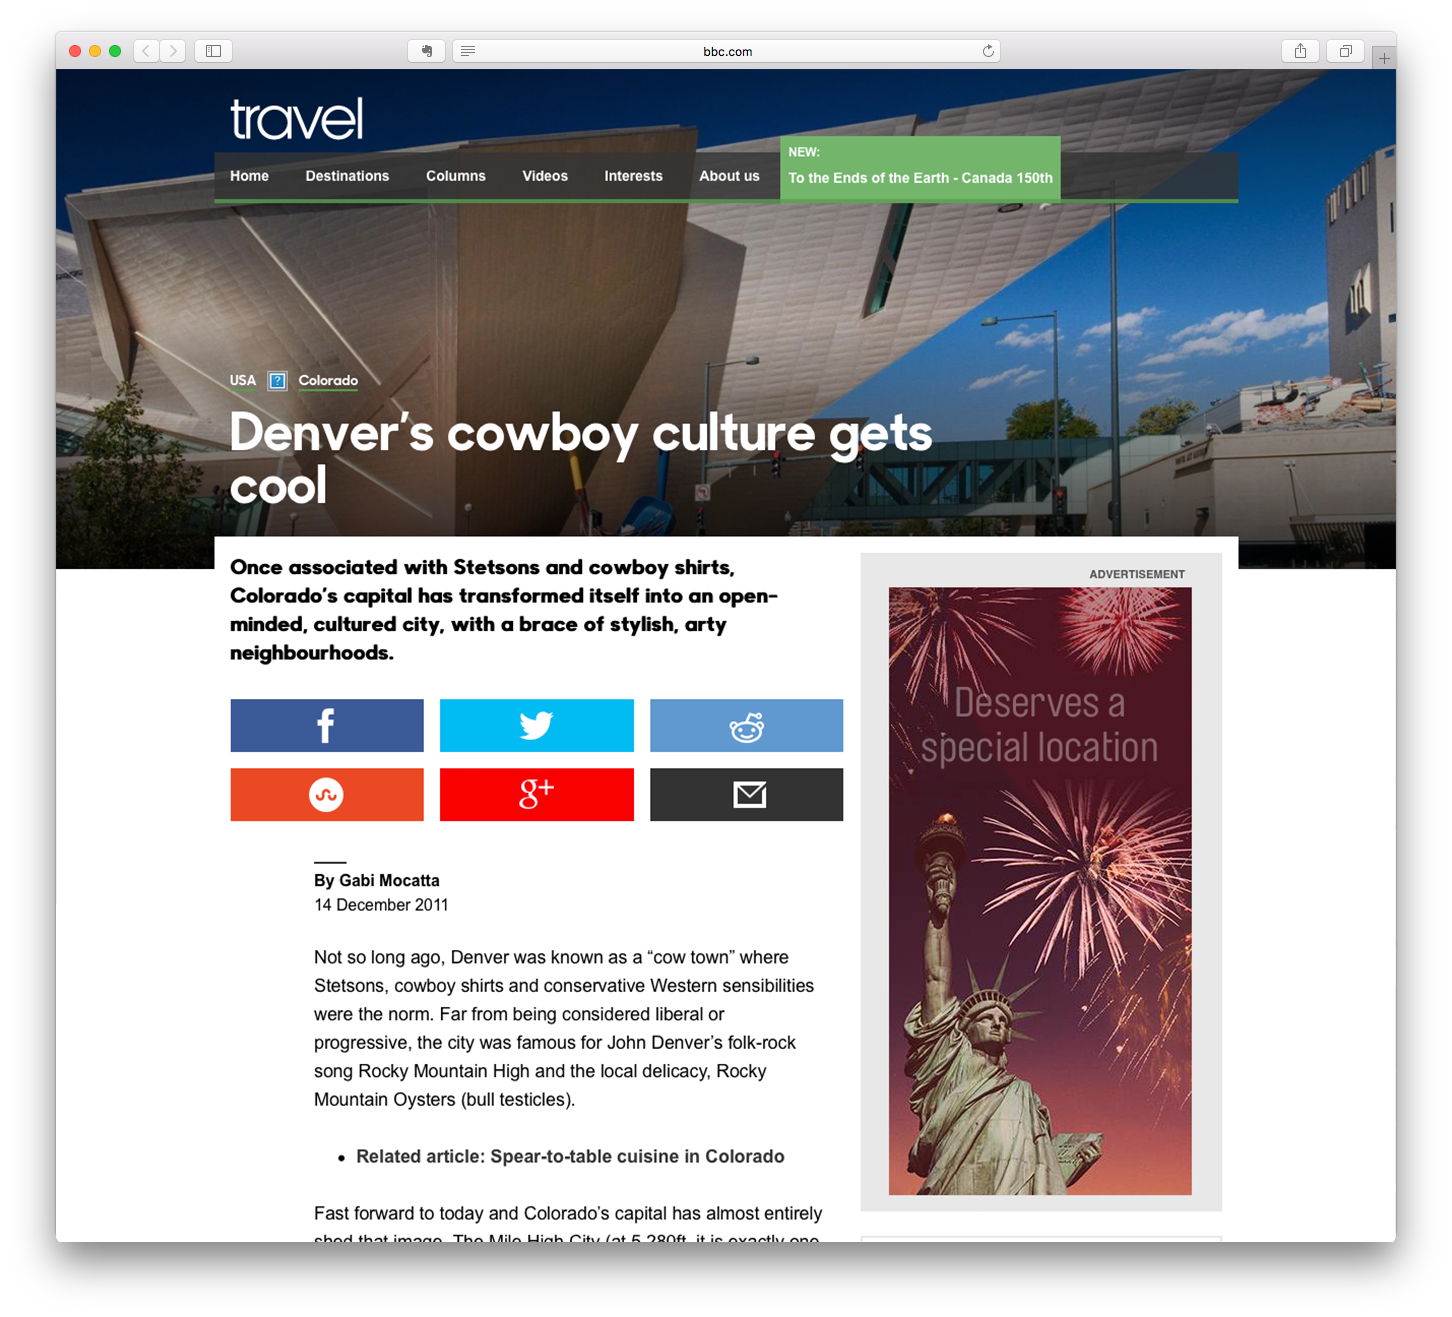 Denver's cowboy culture gets cool